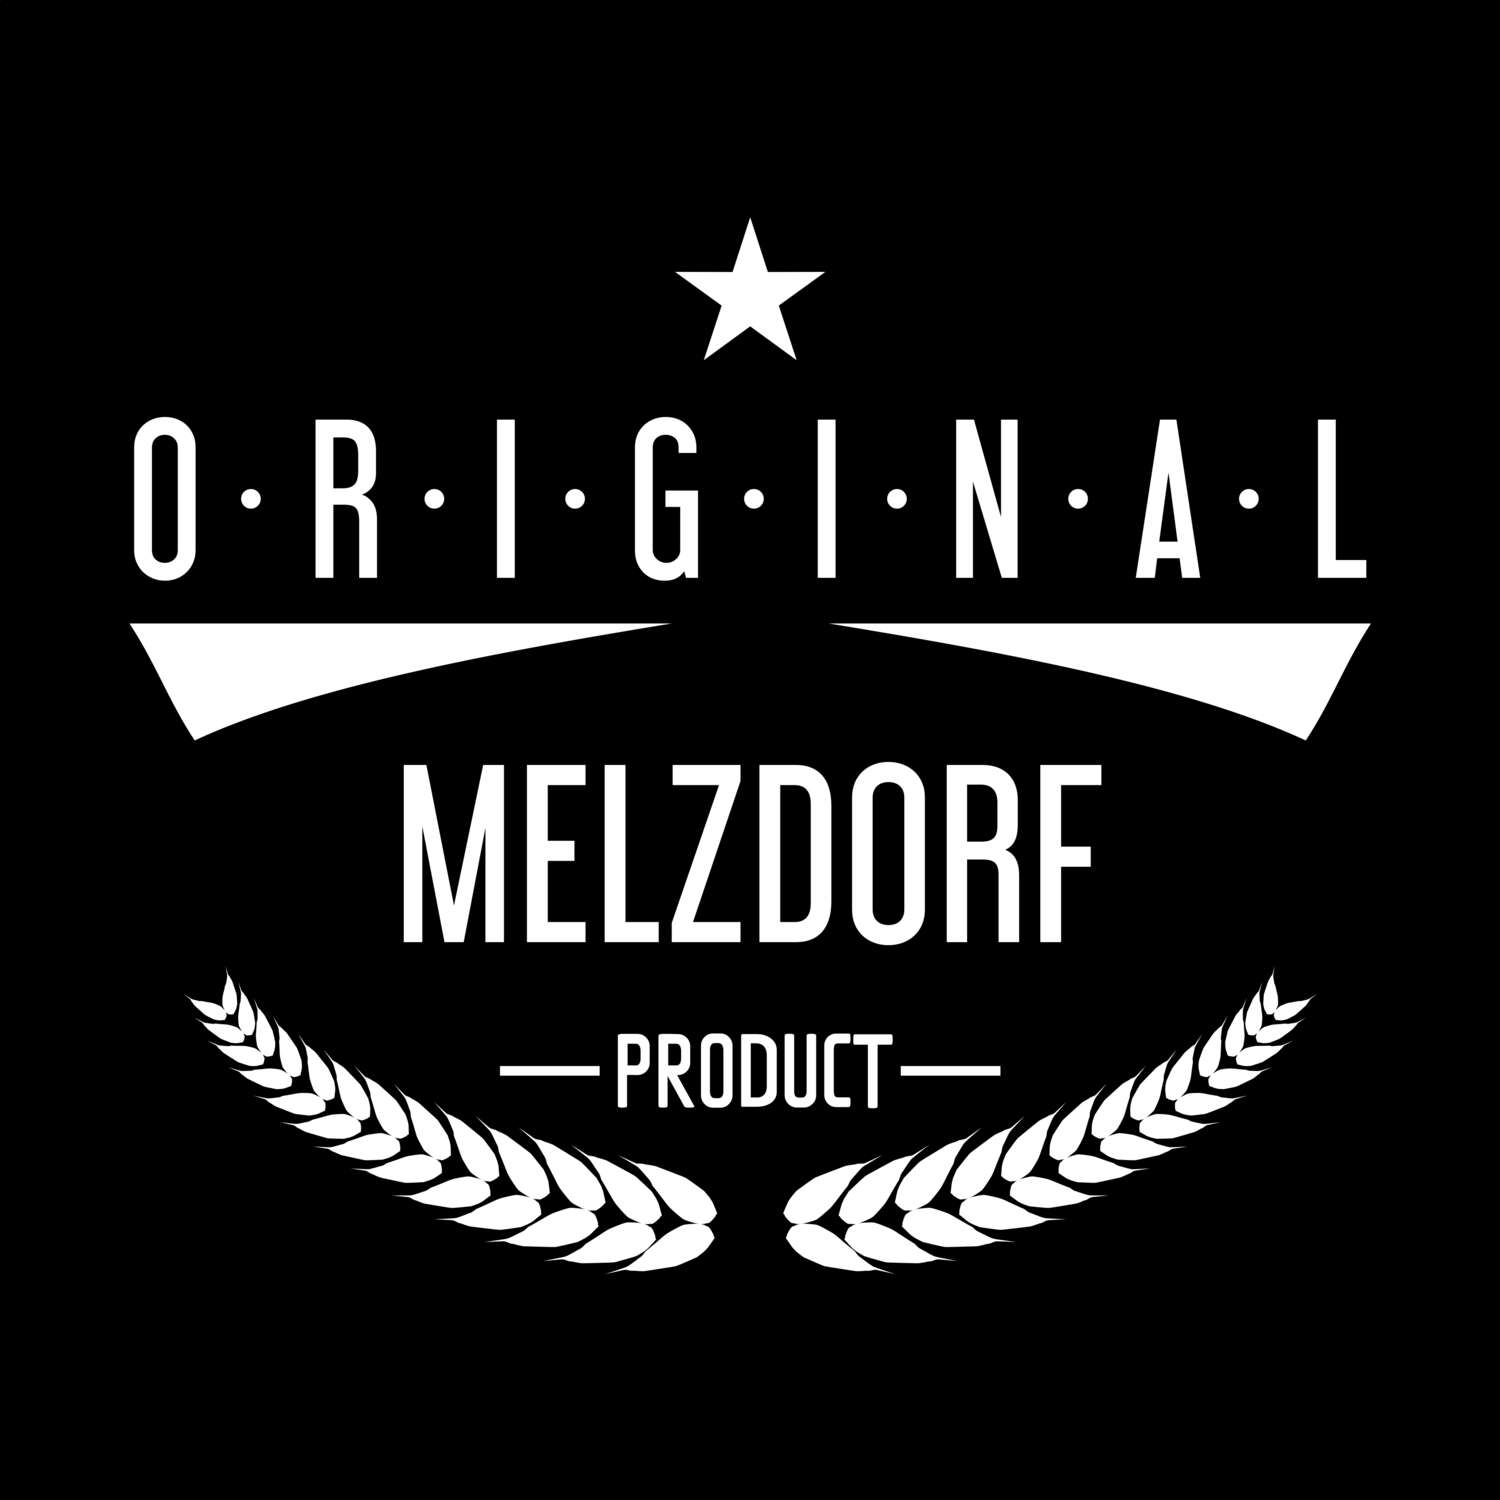 Melzdorf T-Shirt »Original Product«